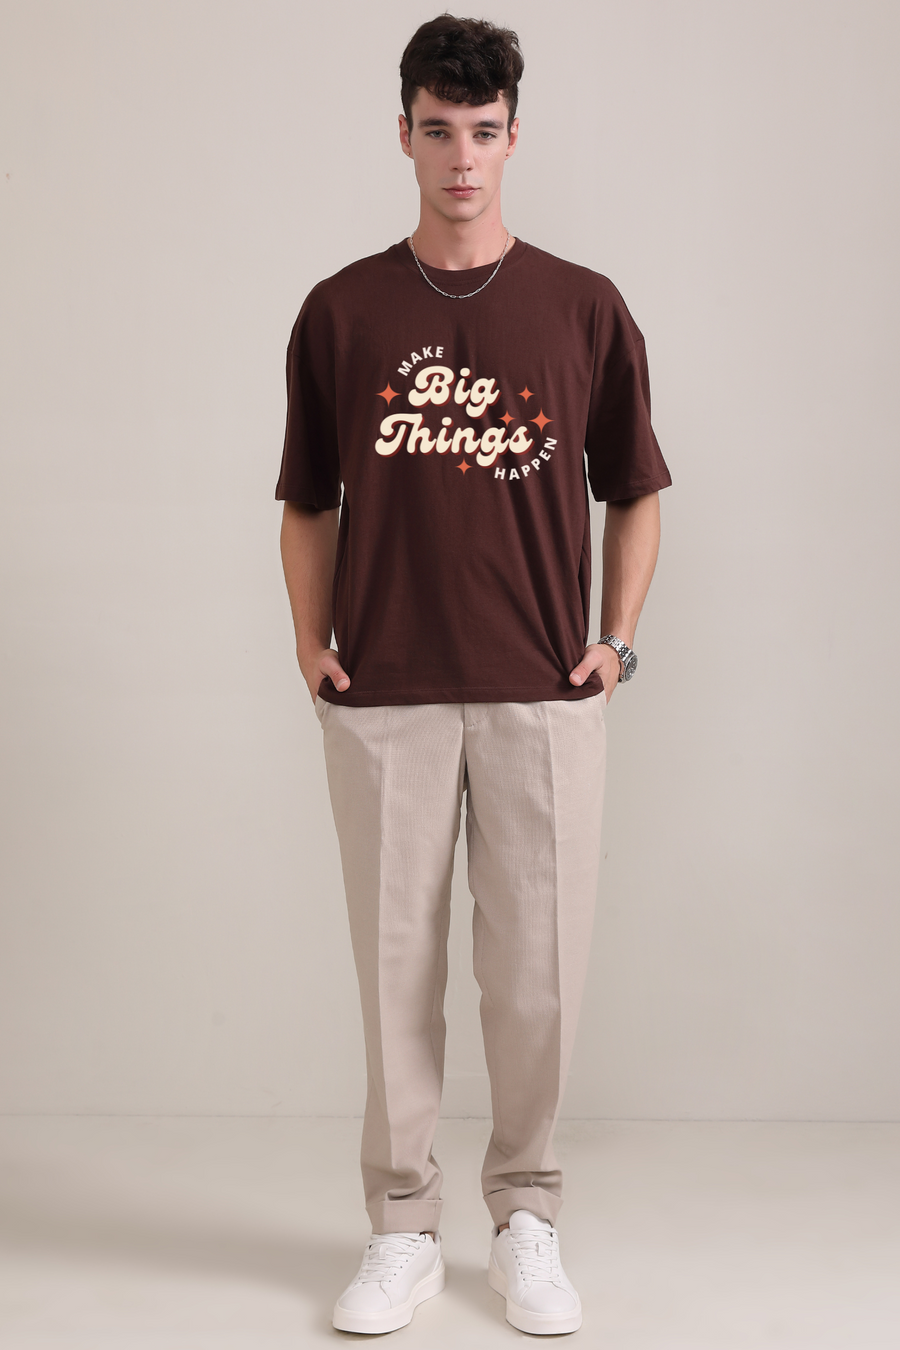 Make Big things Happen- Oversized t-shirt